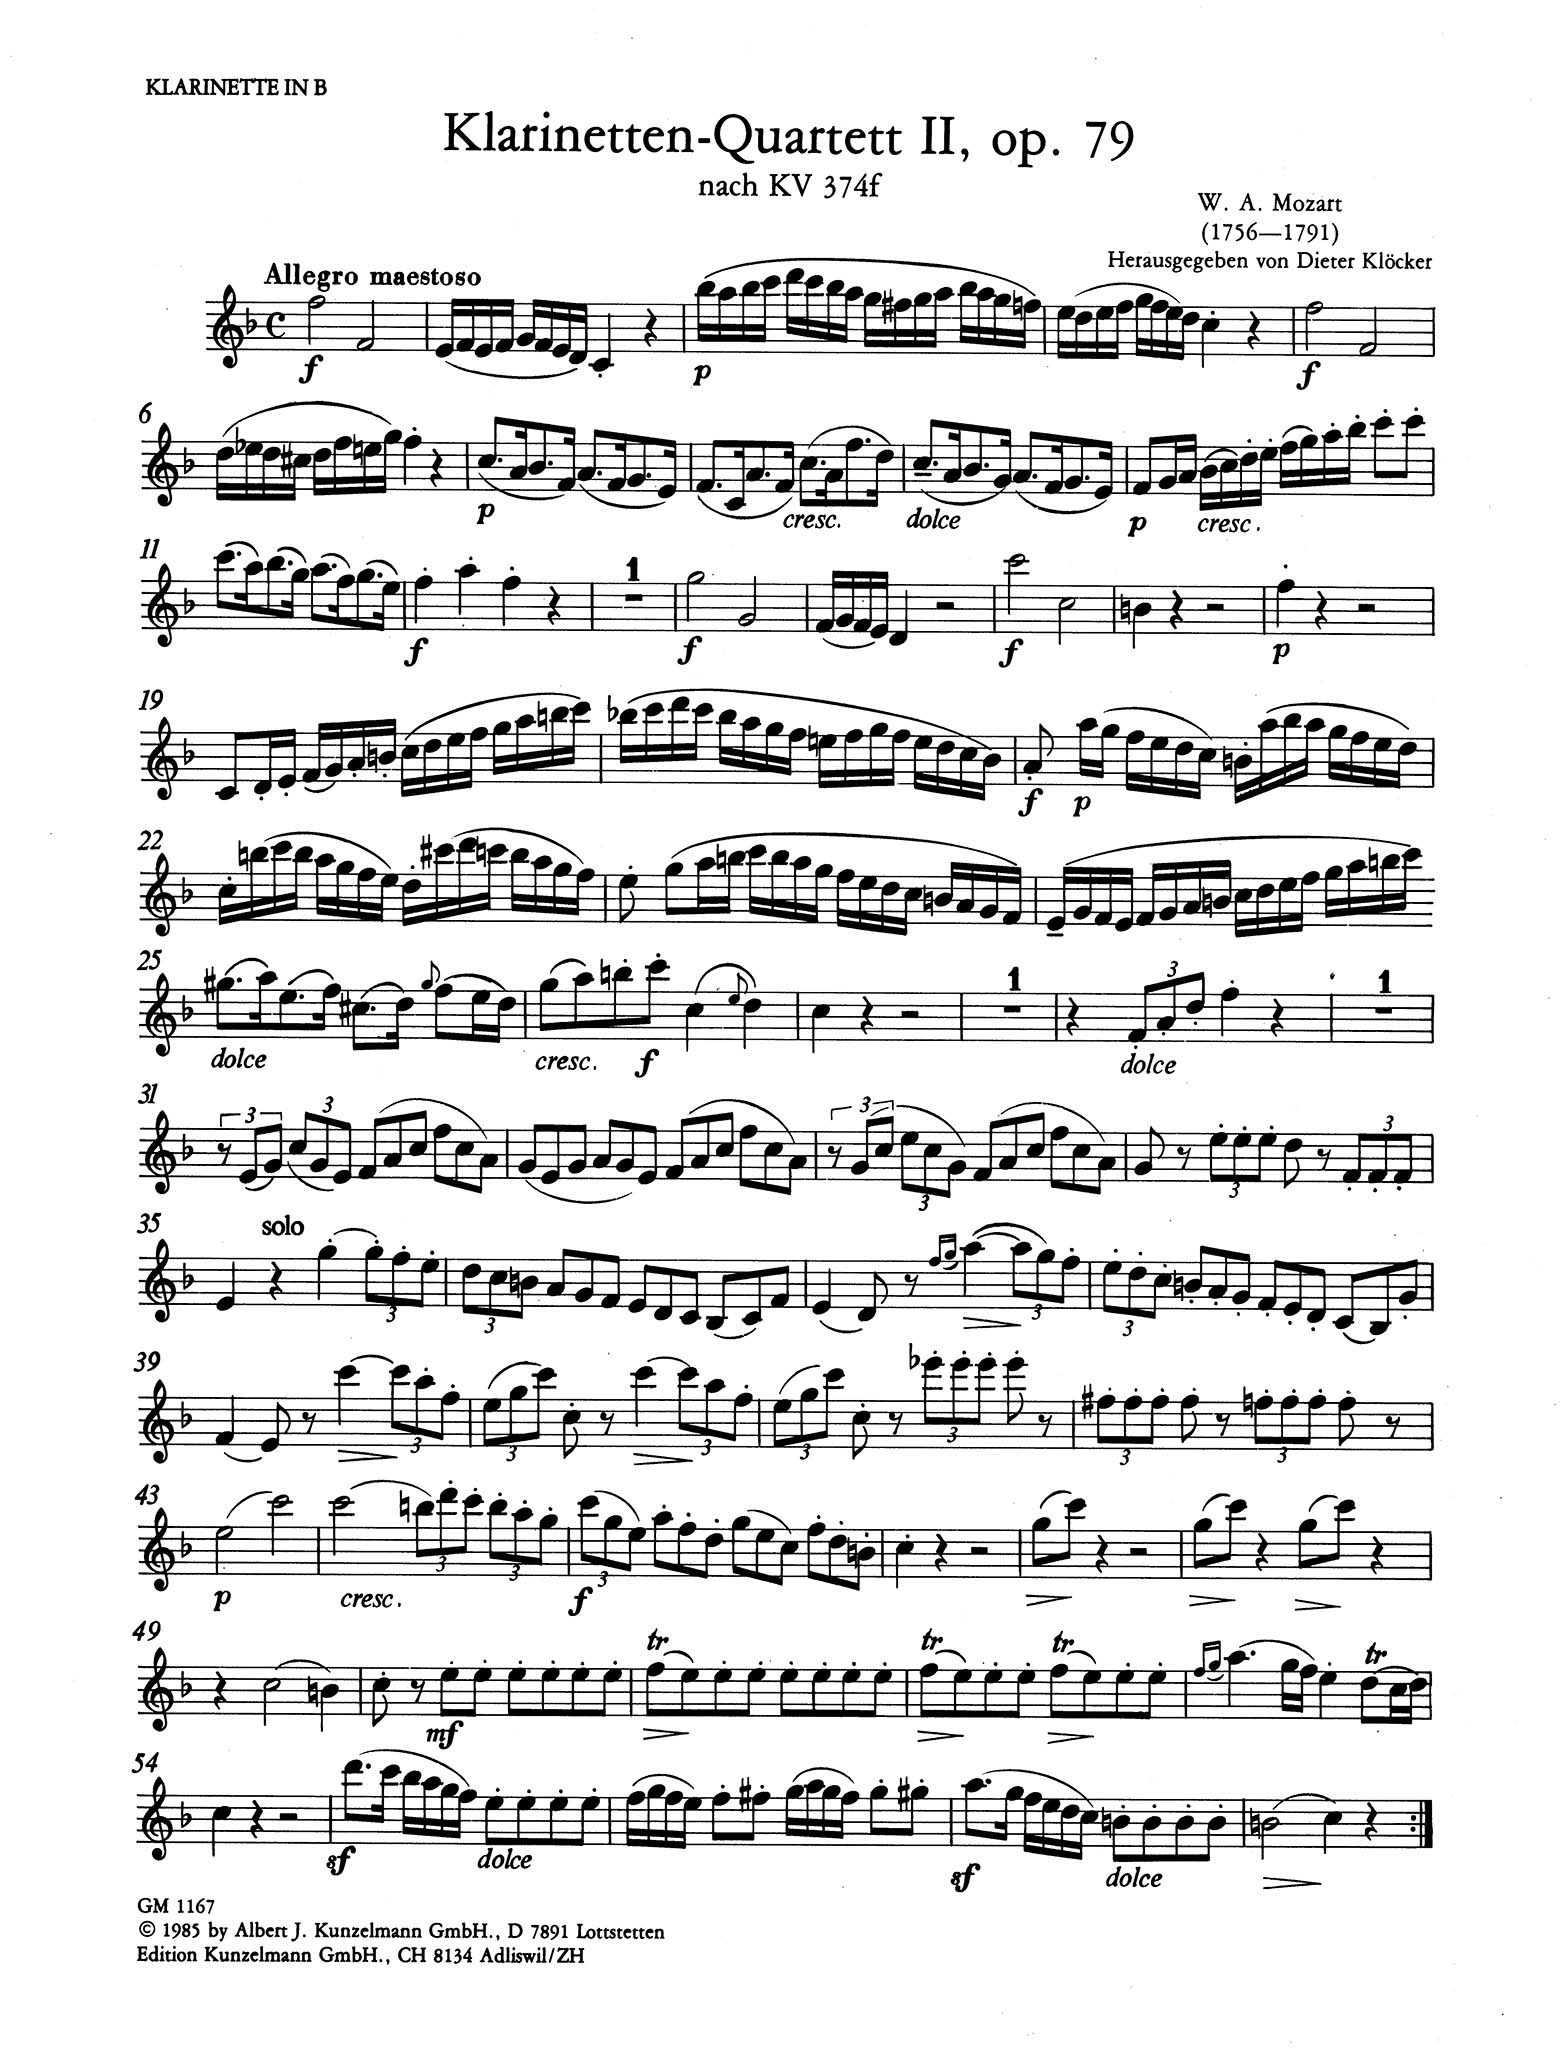 Violin Sonata in E-Flat Major, K. 380/374f Clarinet part